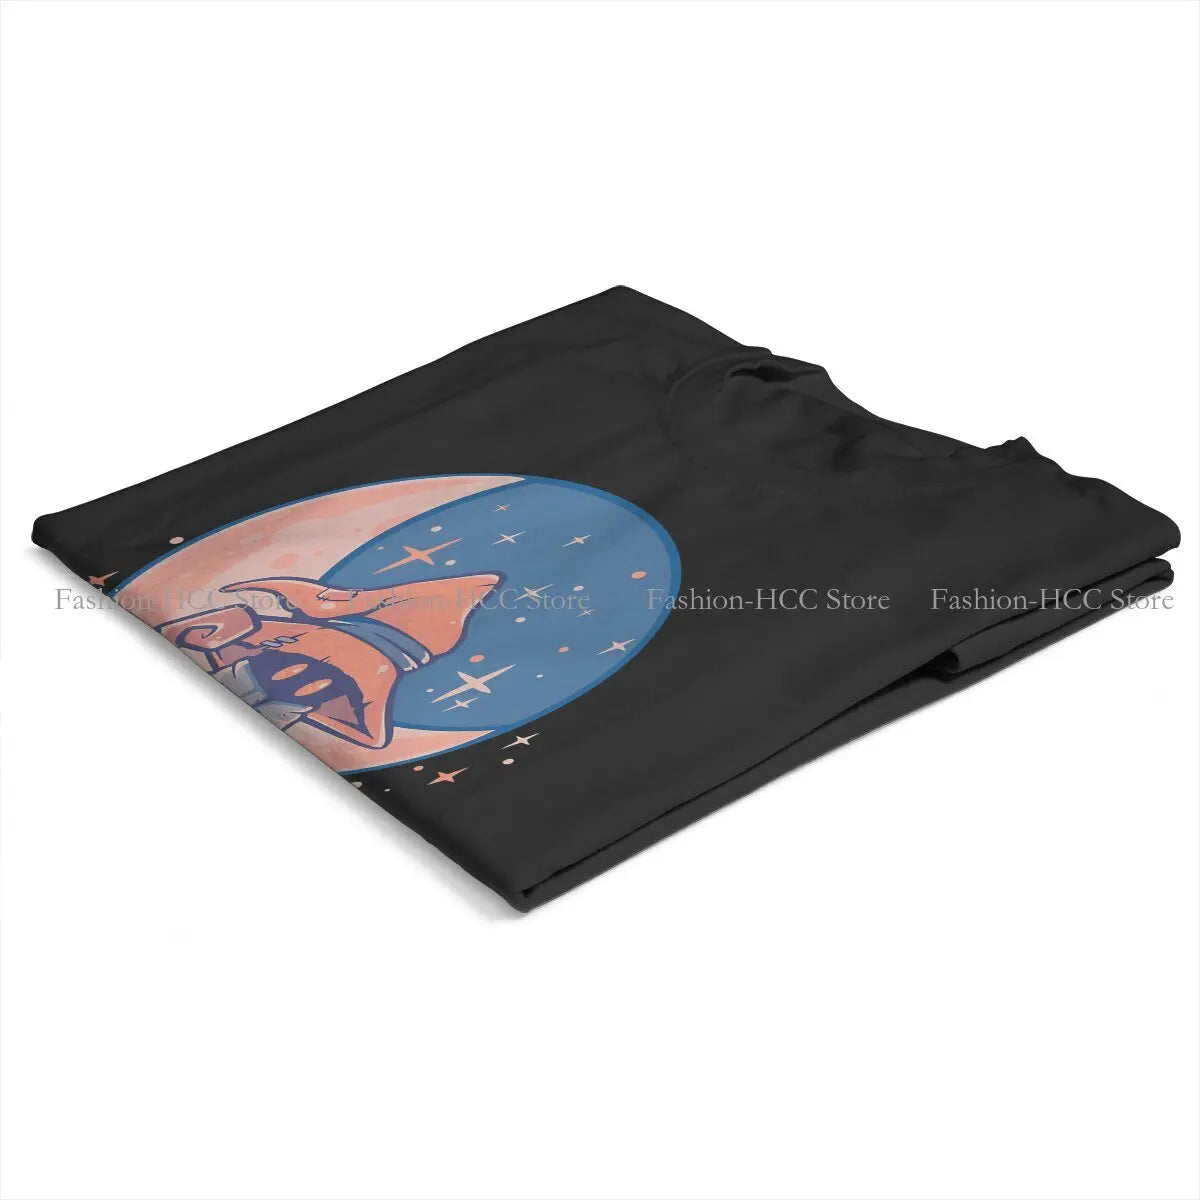 Ffixv Nightfall Noir Mage X Moogle King O Cou T-shirt Final Fantasy Basique T-shirt Haut Pour Femme Nouveau Design